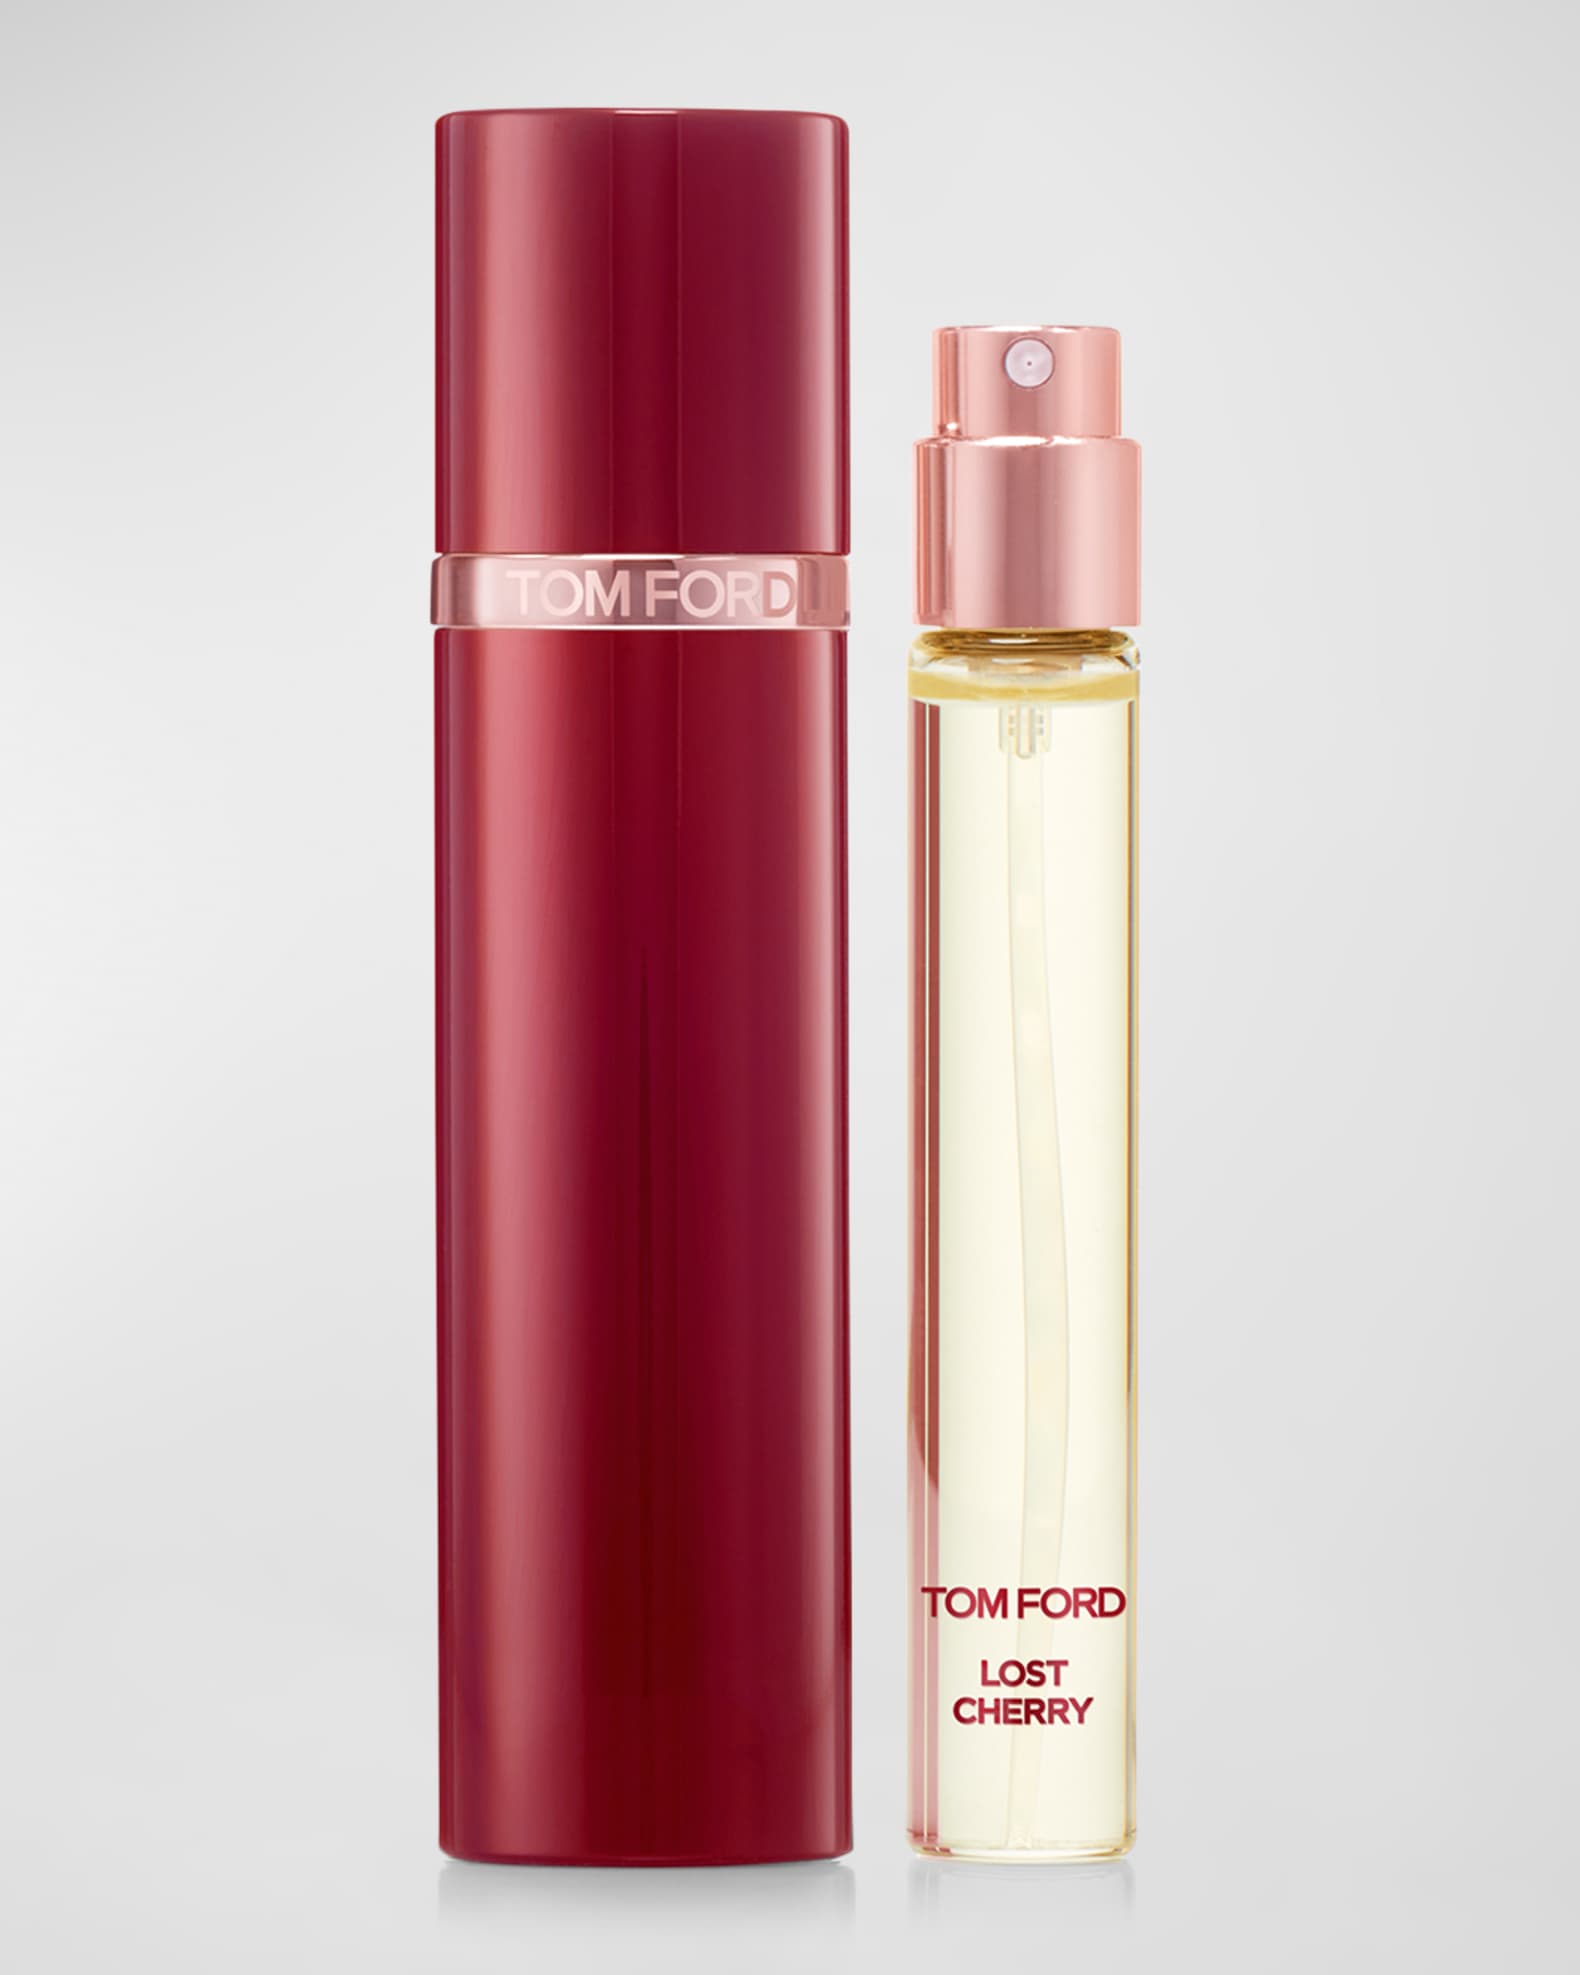 TOM FORD Lost Cherry Eau de Parfum Fragrance Travel Spray | Neiman Marcus